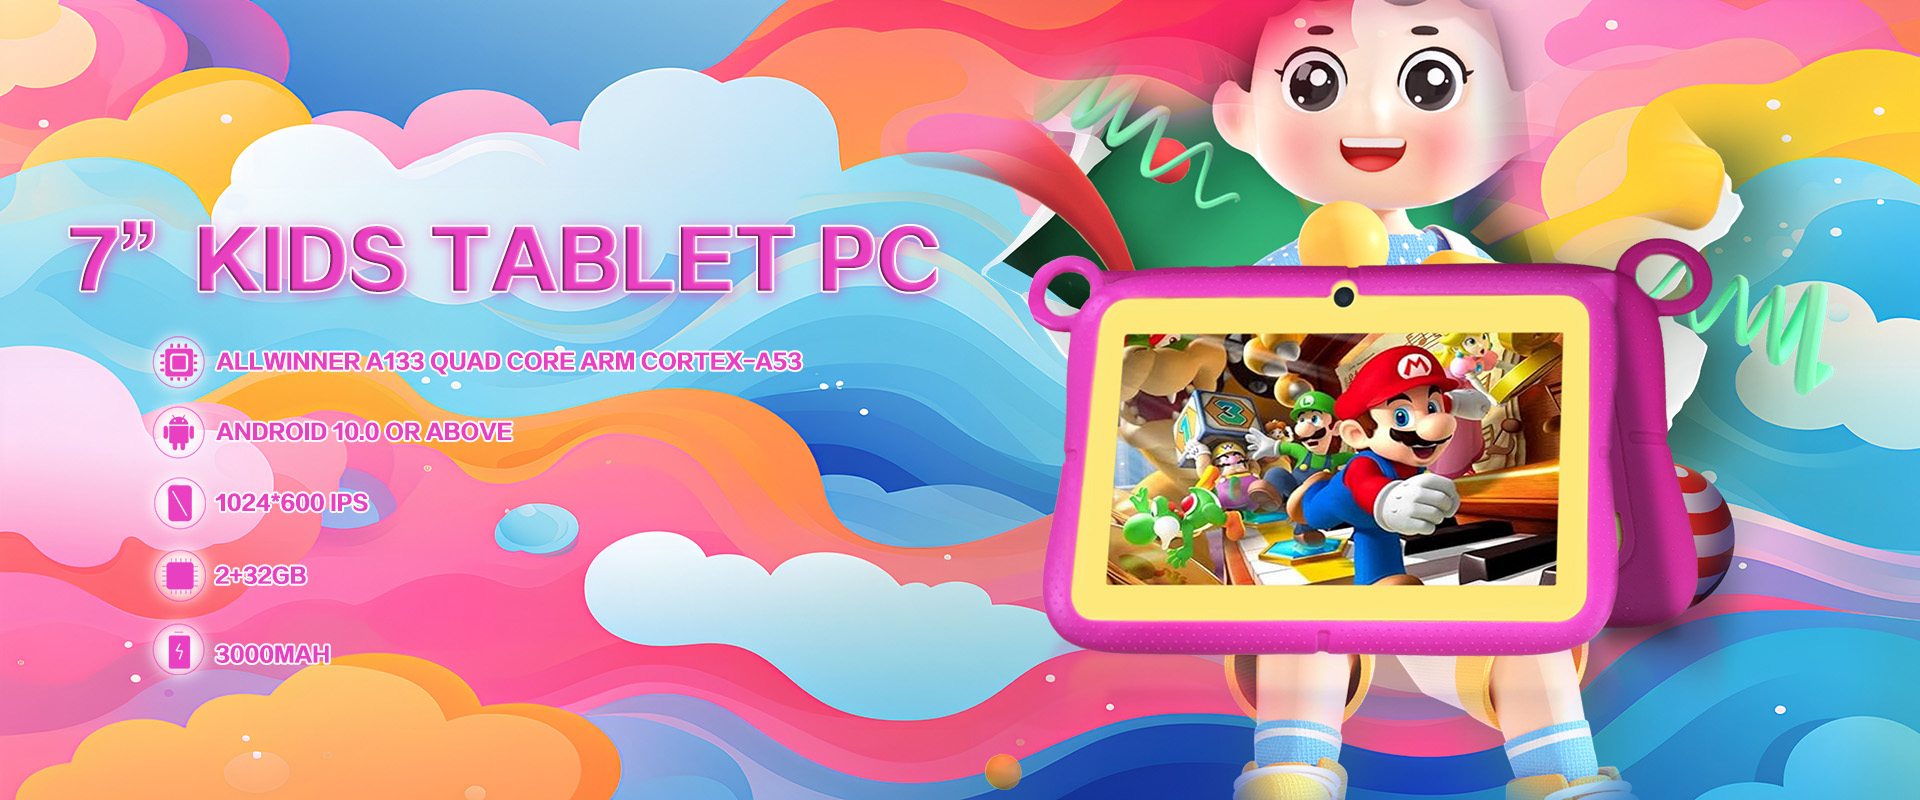 PC Tablet Anak 7''